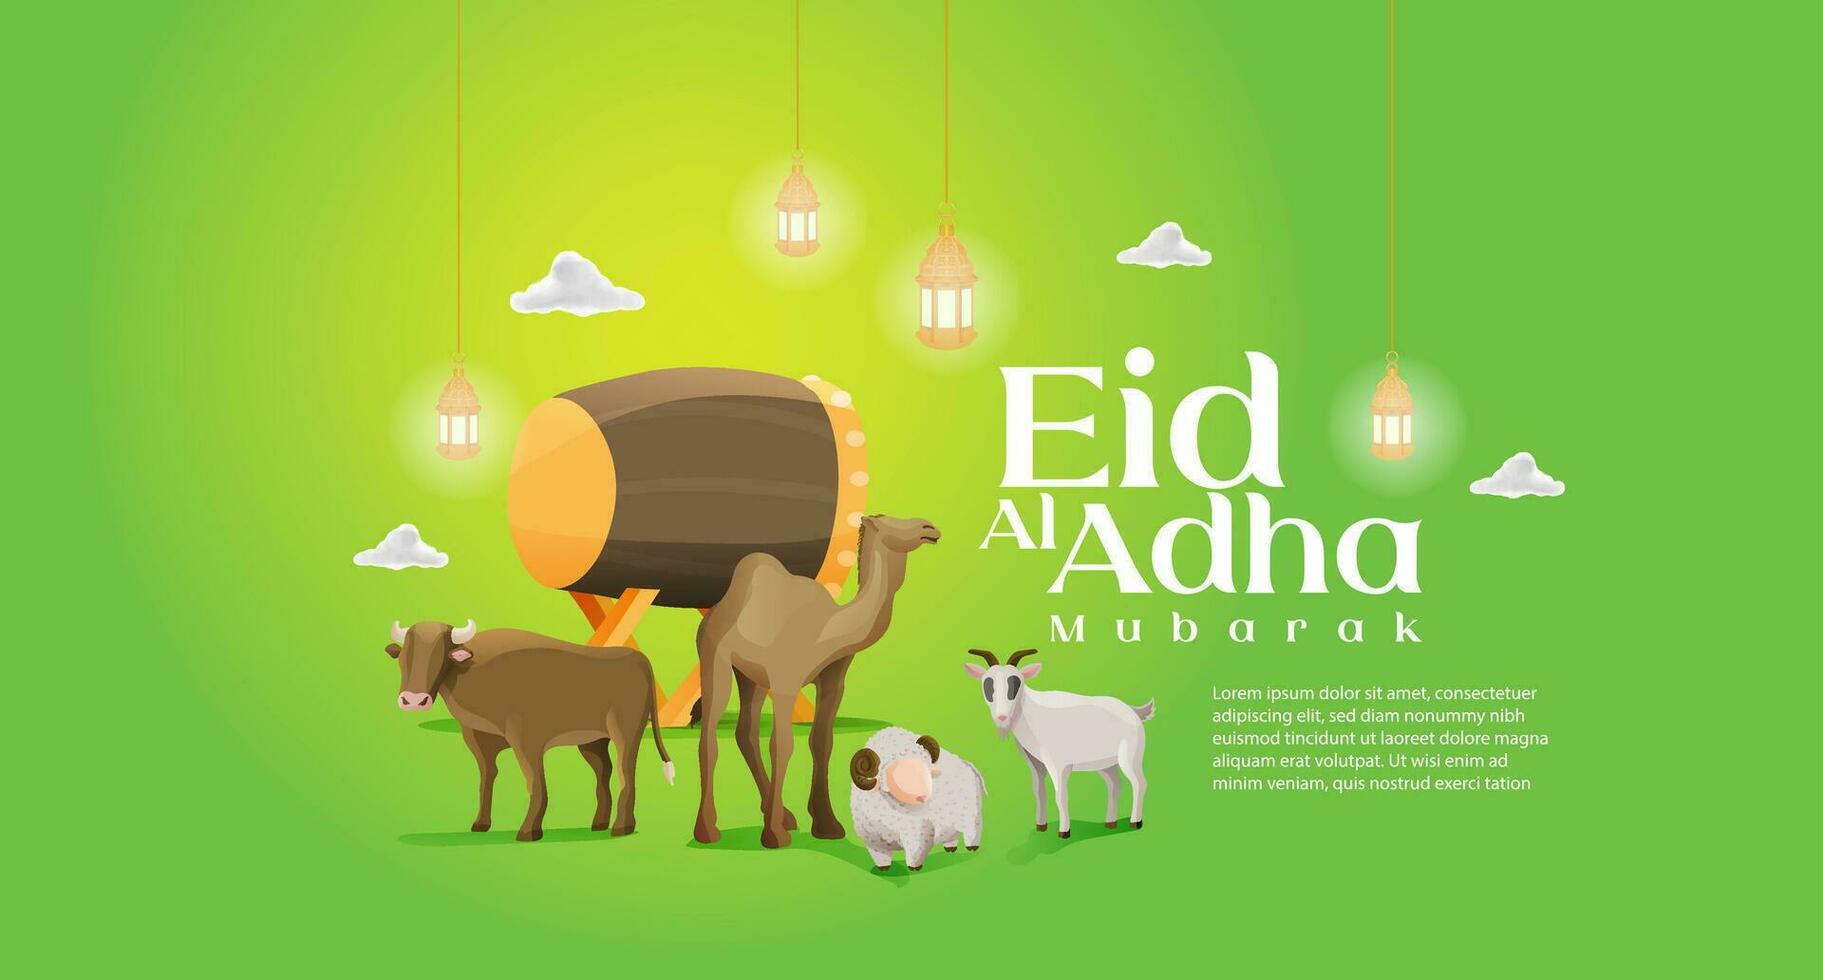 eid Al adha mubarak salutation concept avec sacrifice animal et lanterne illustration vecteur